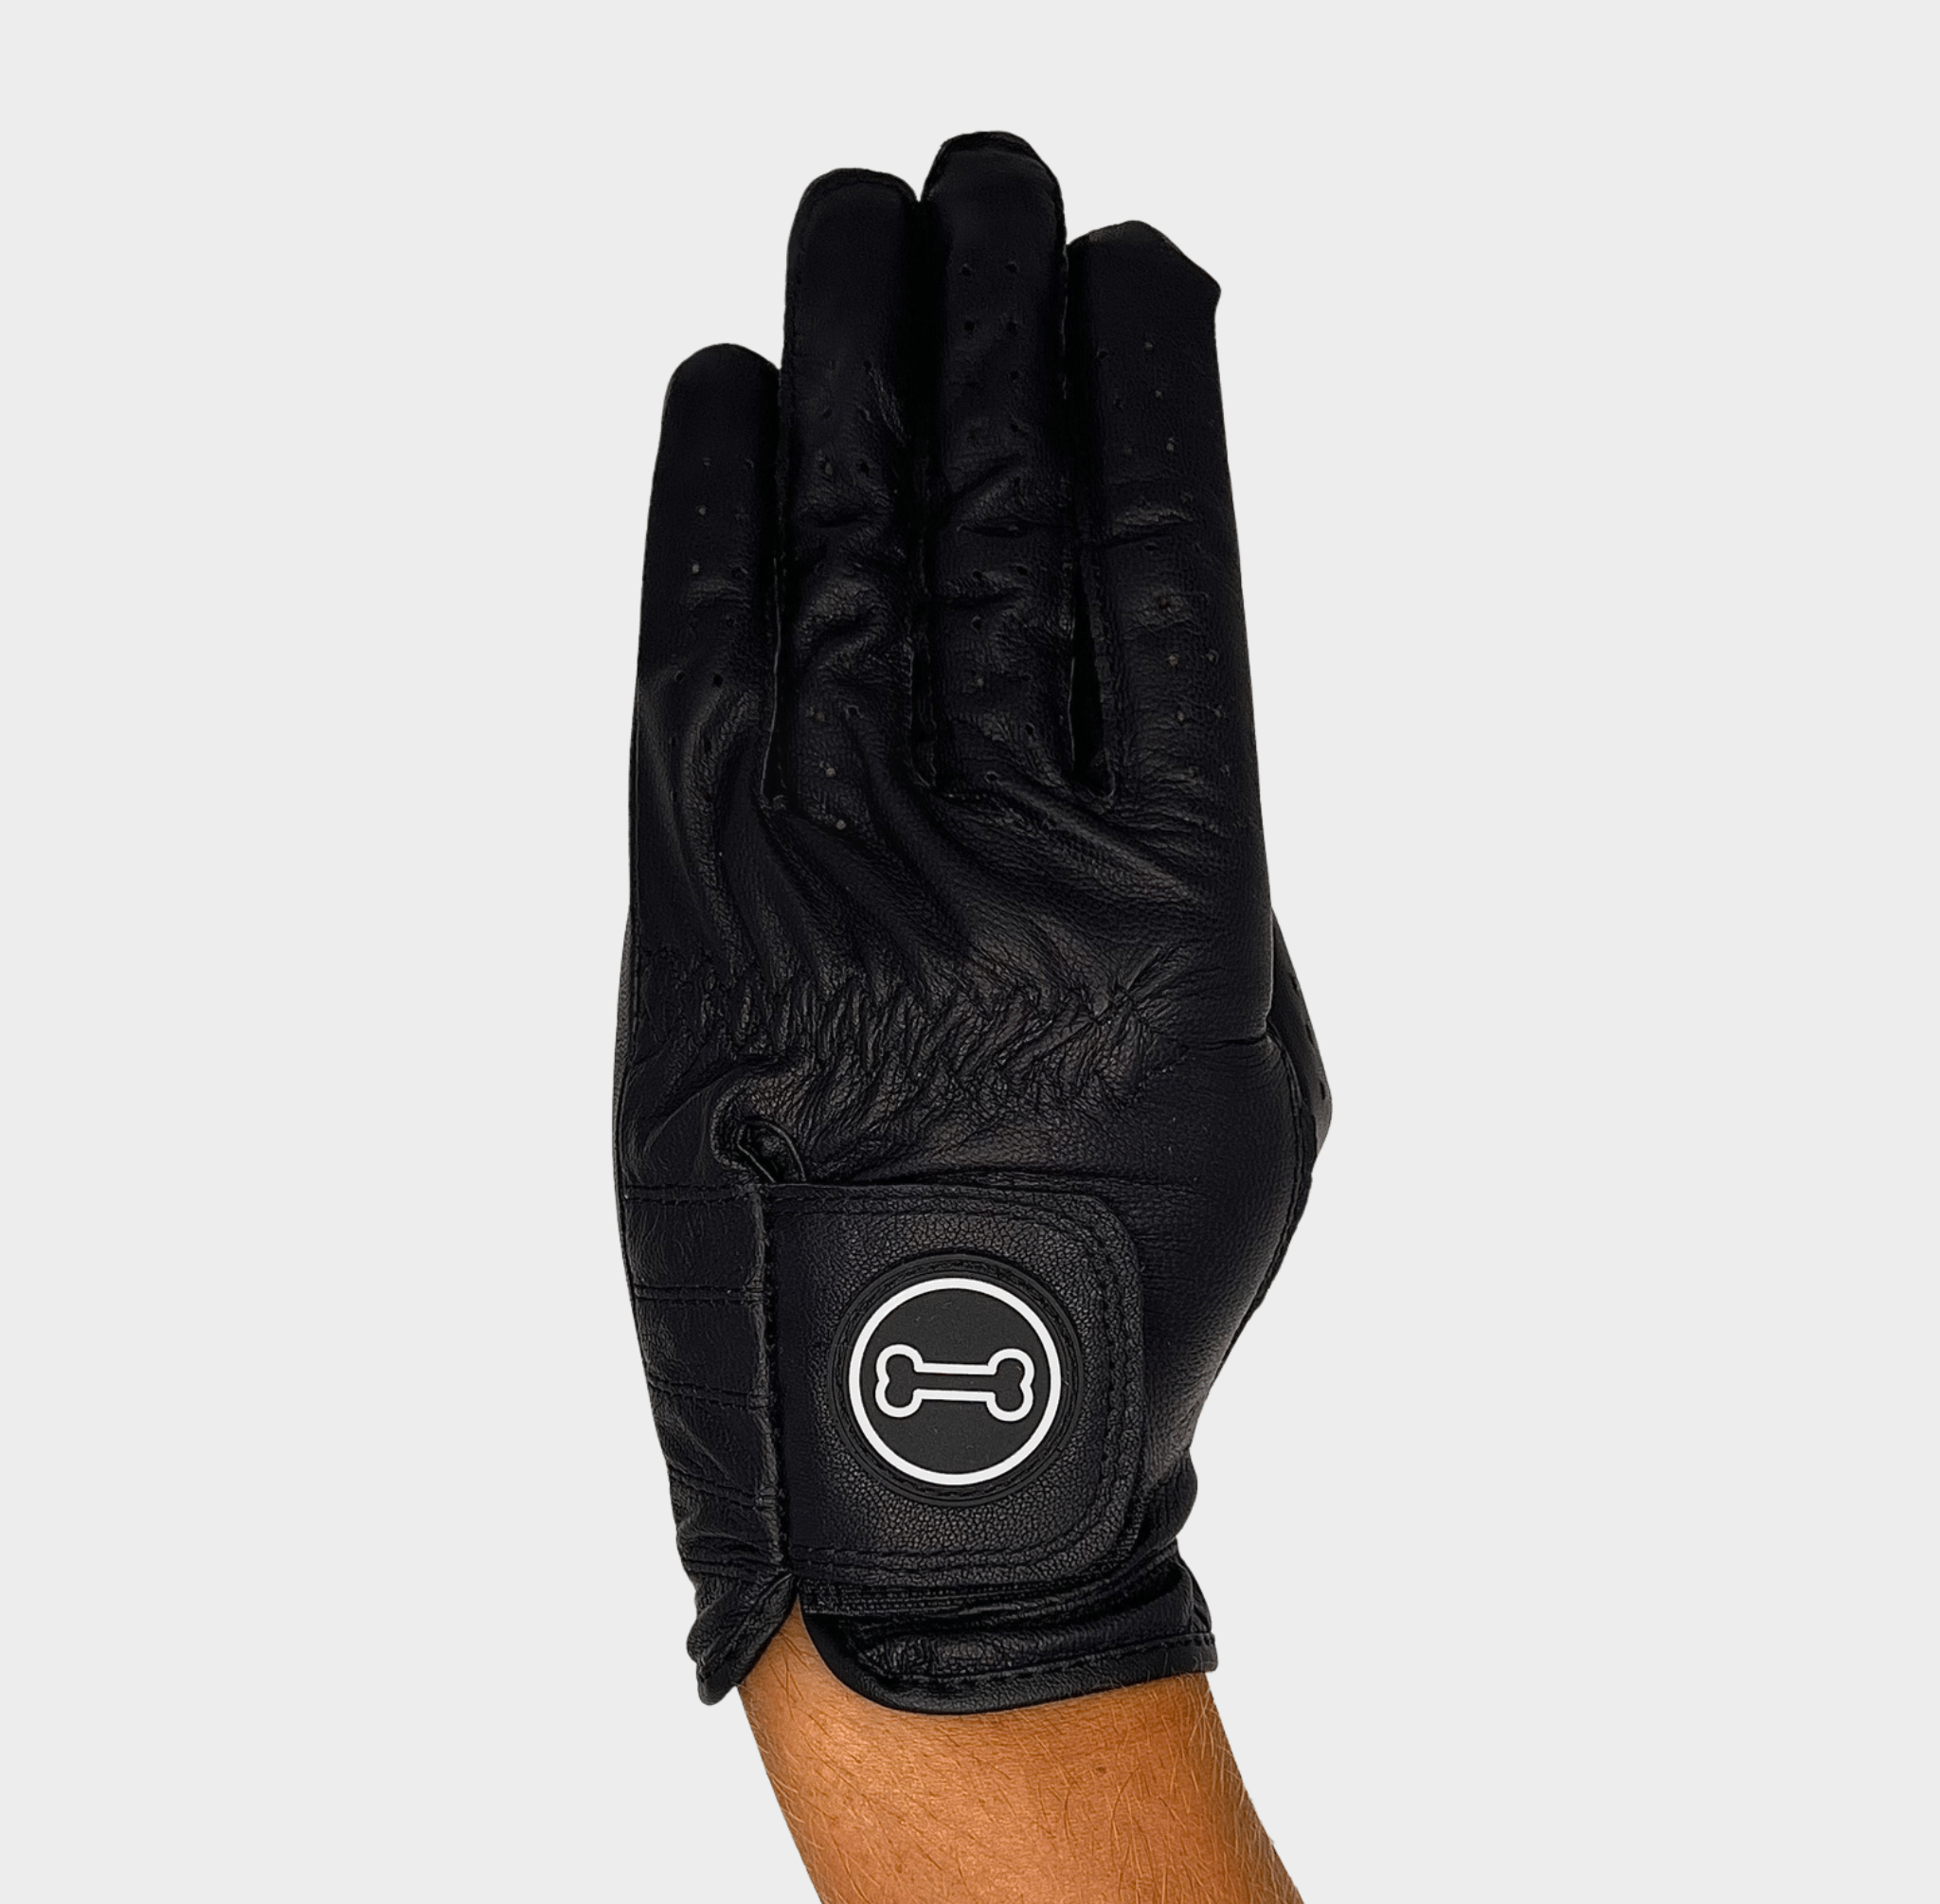 Dogleg left - Ladies Black Glove